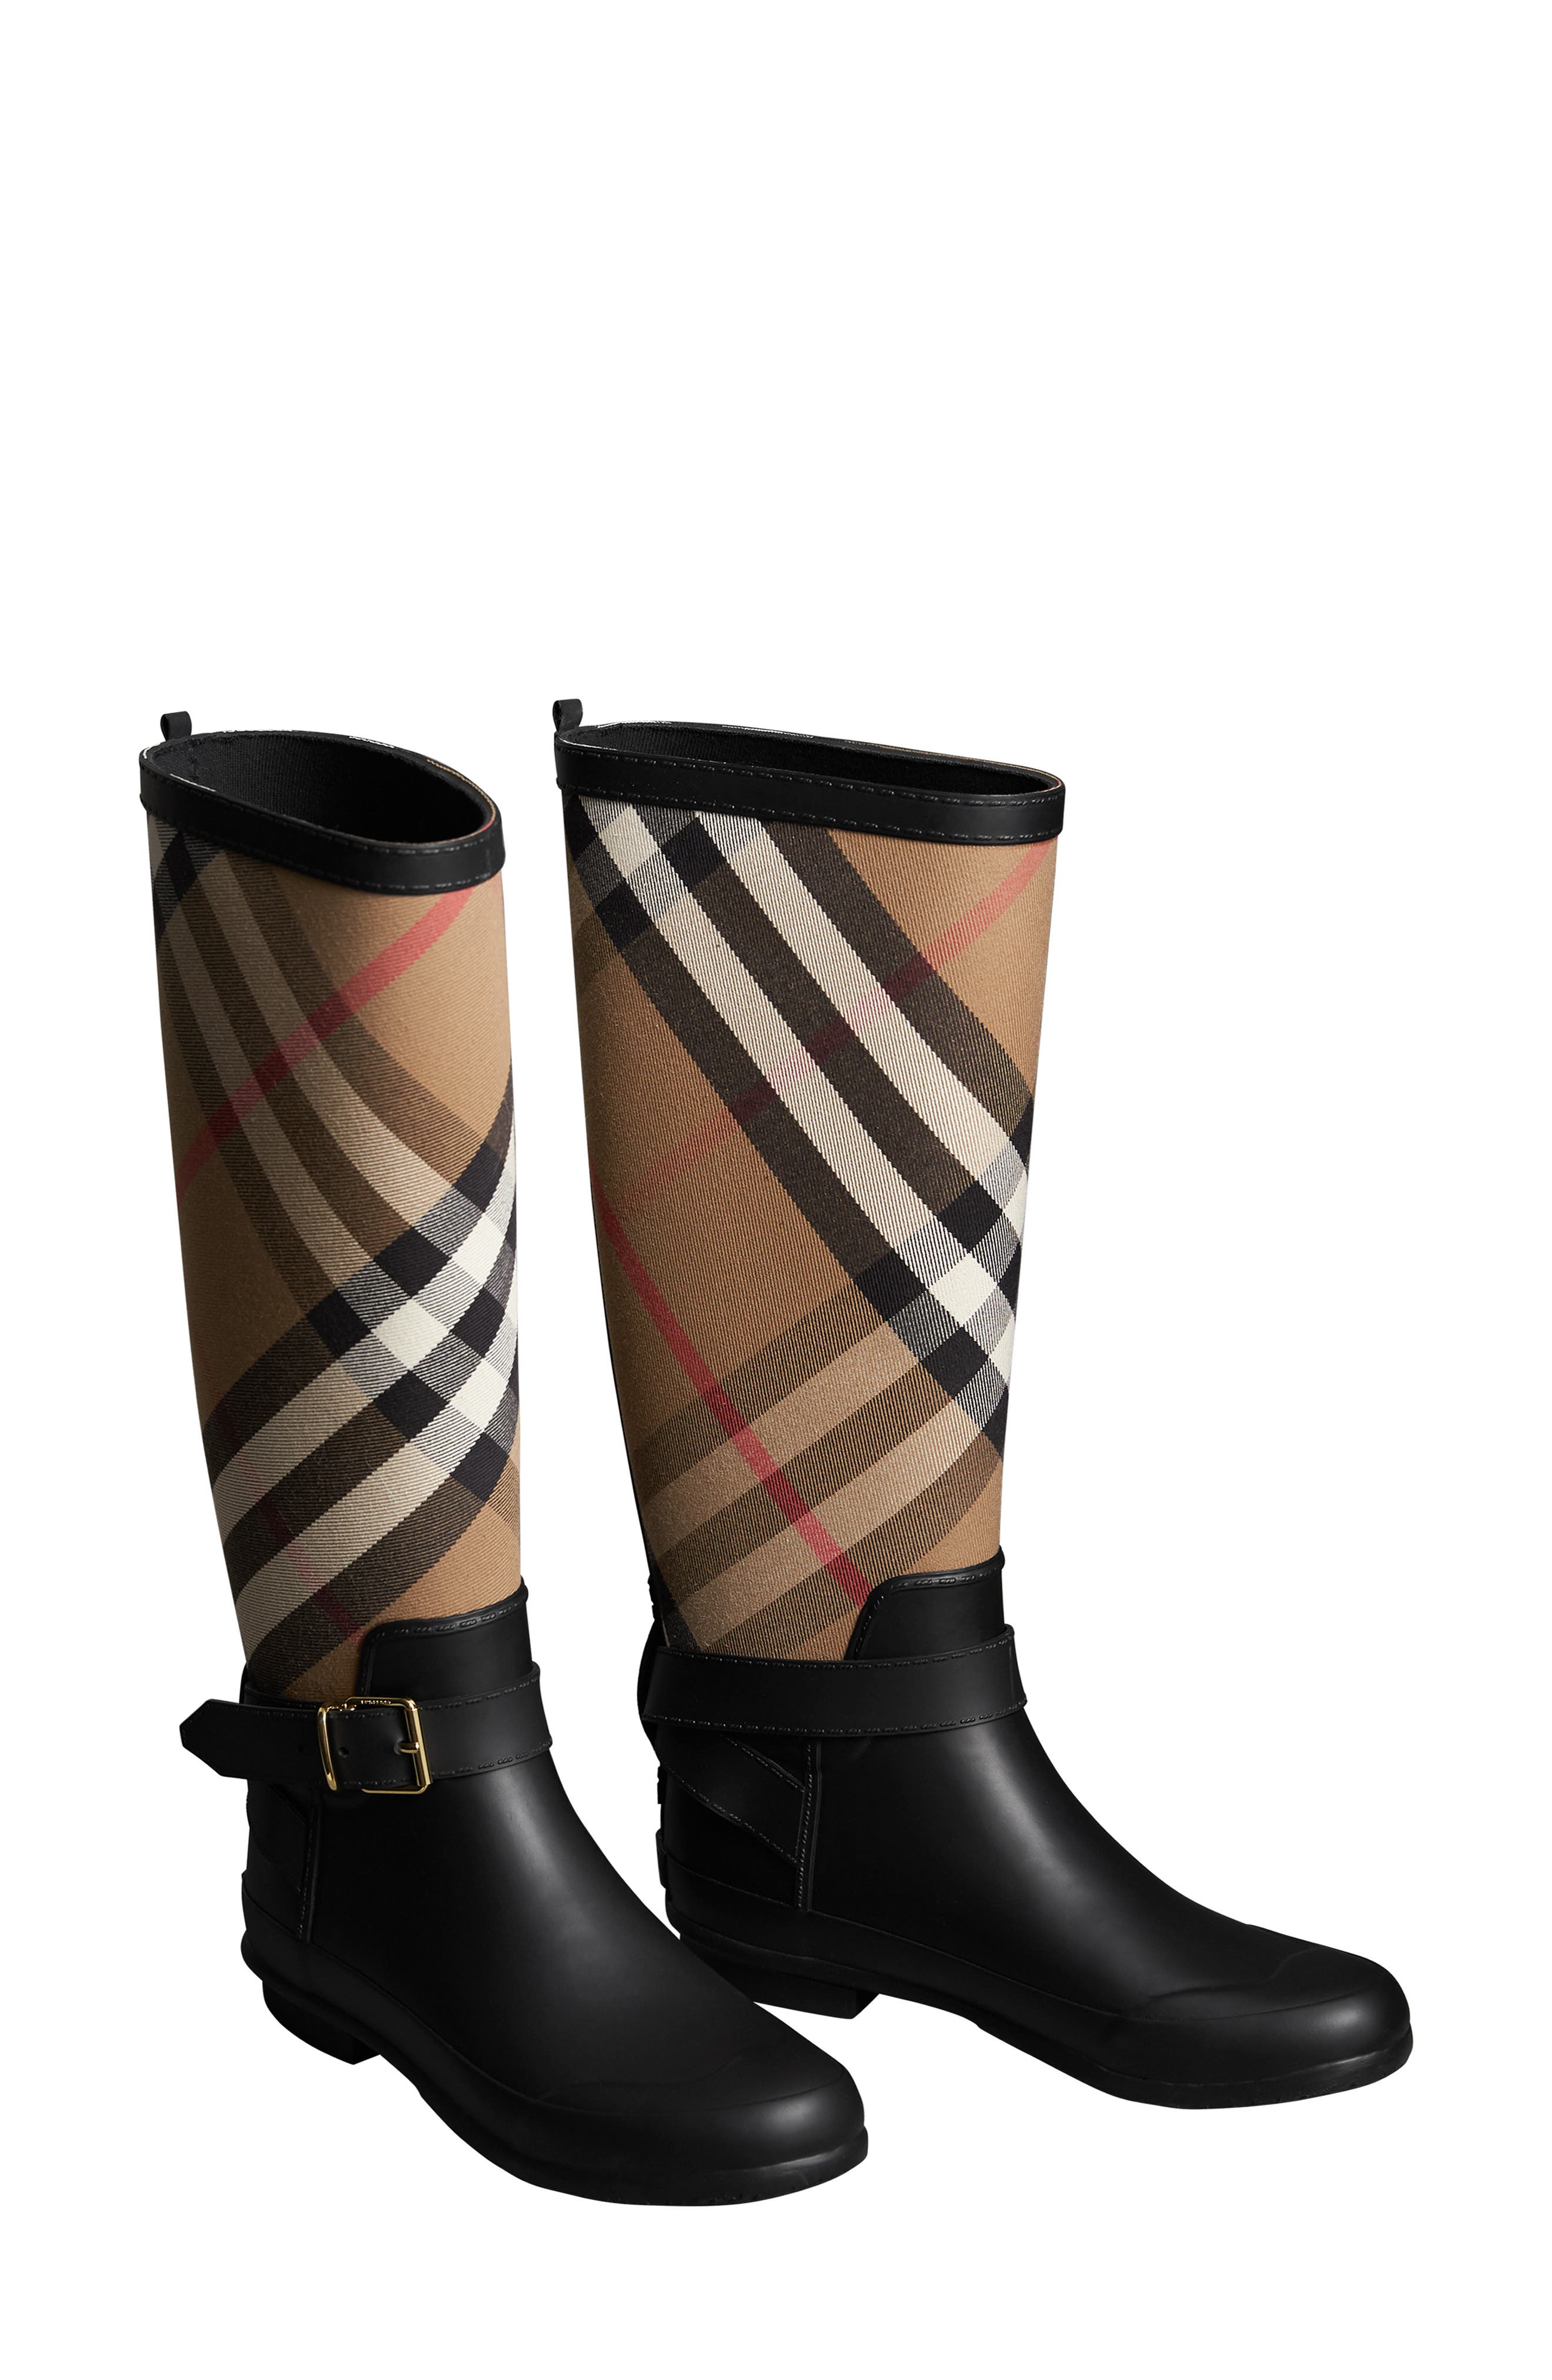 burberry rain boots womens